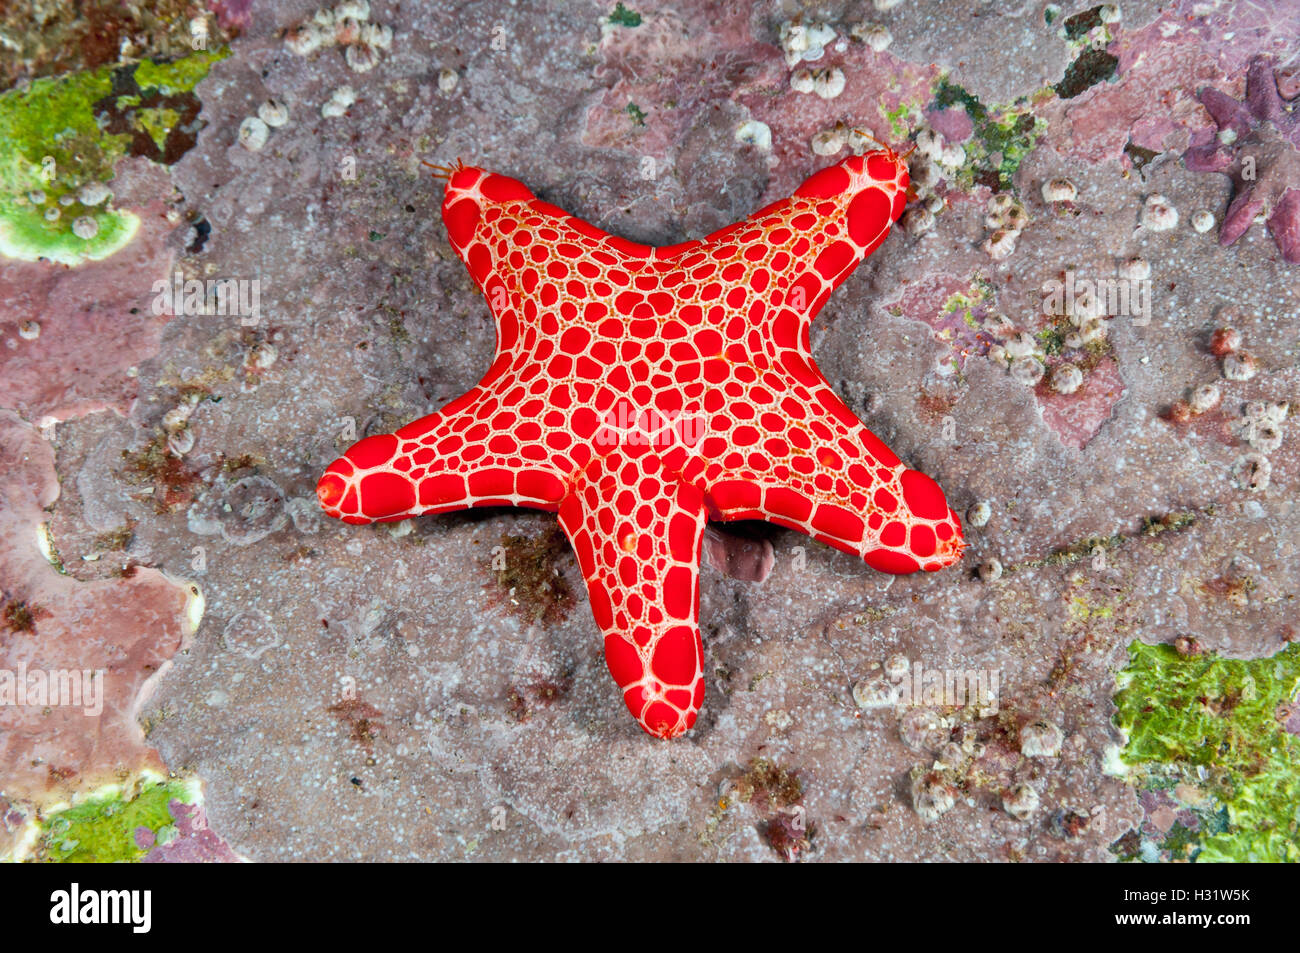 QZ72823-D. Vermilion Biscuit Sea star (Pentagonaster duebeni), also called the Australian biscuit starfish. Australia, Pacific O Stock Photo